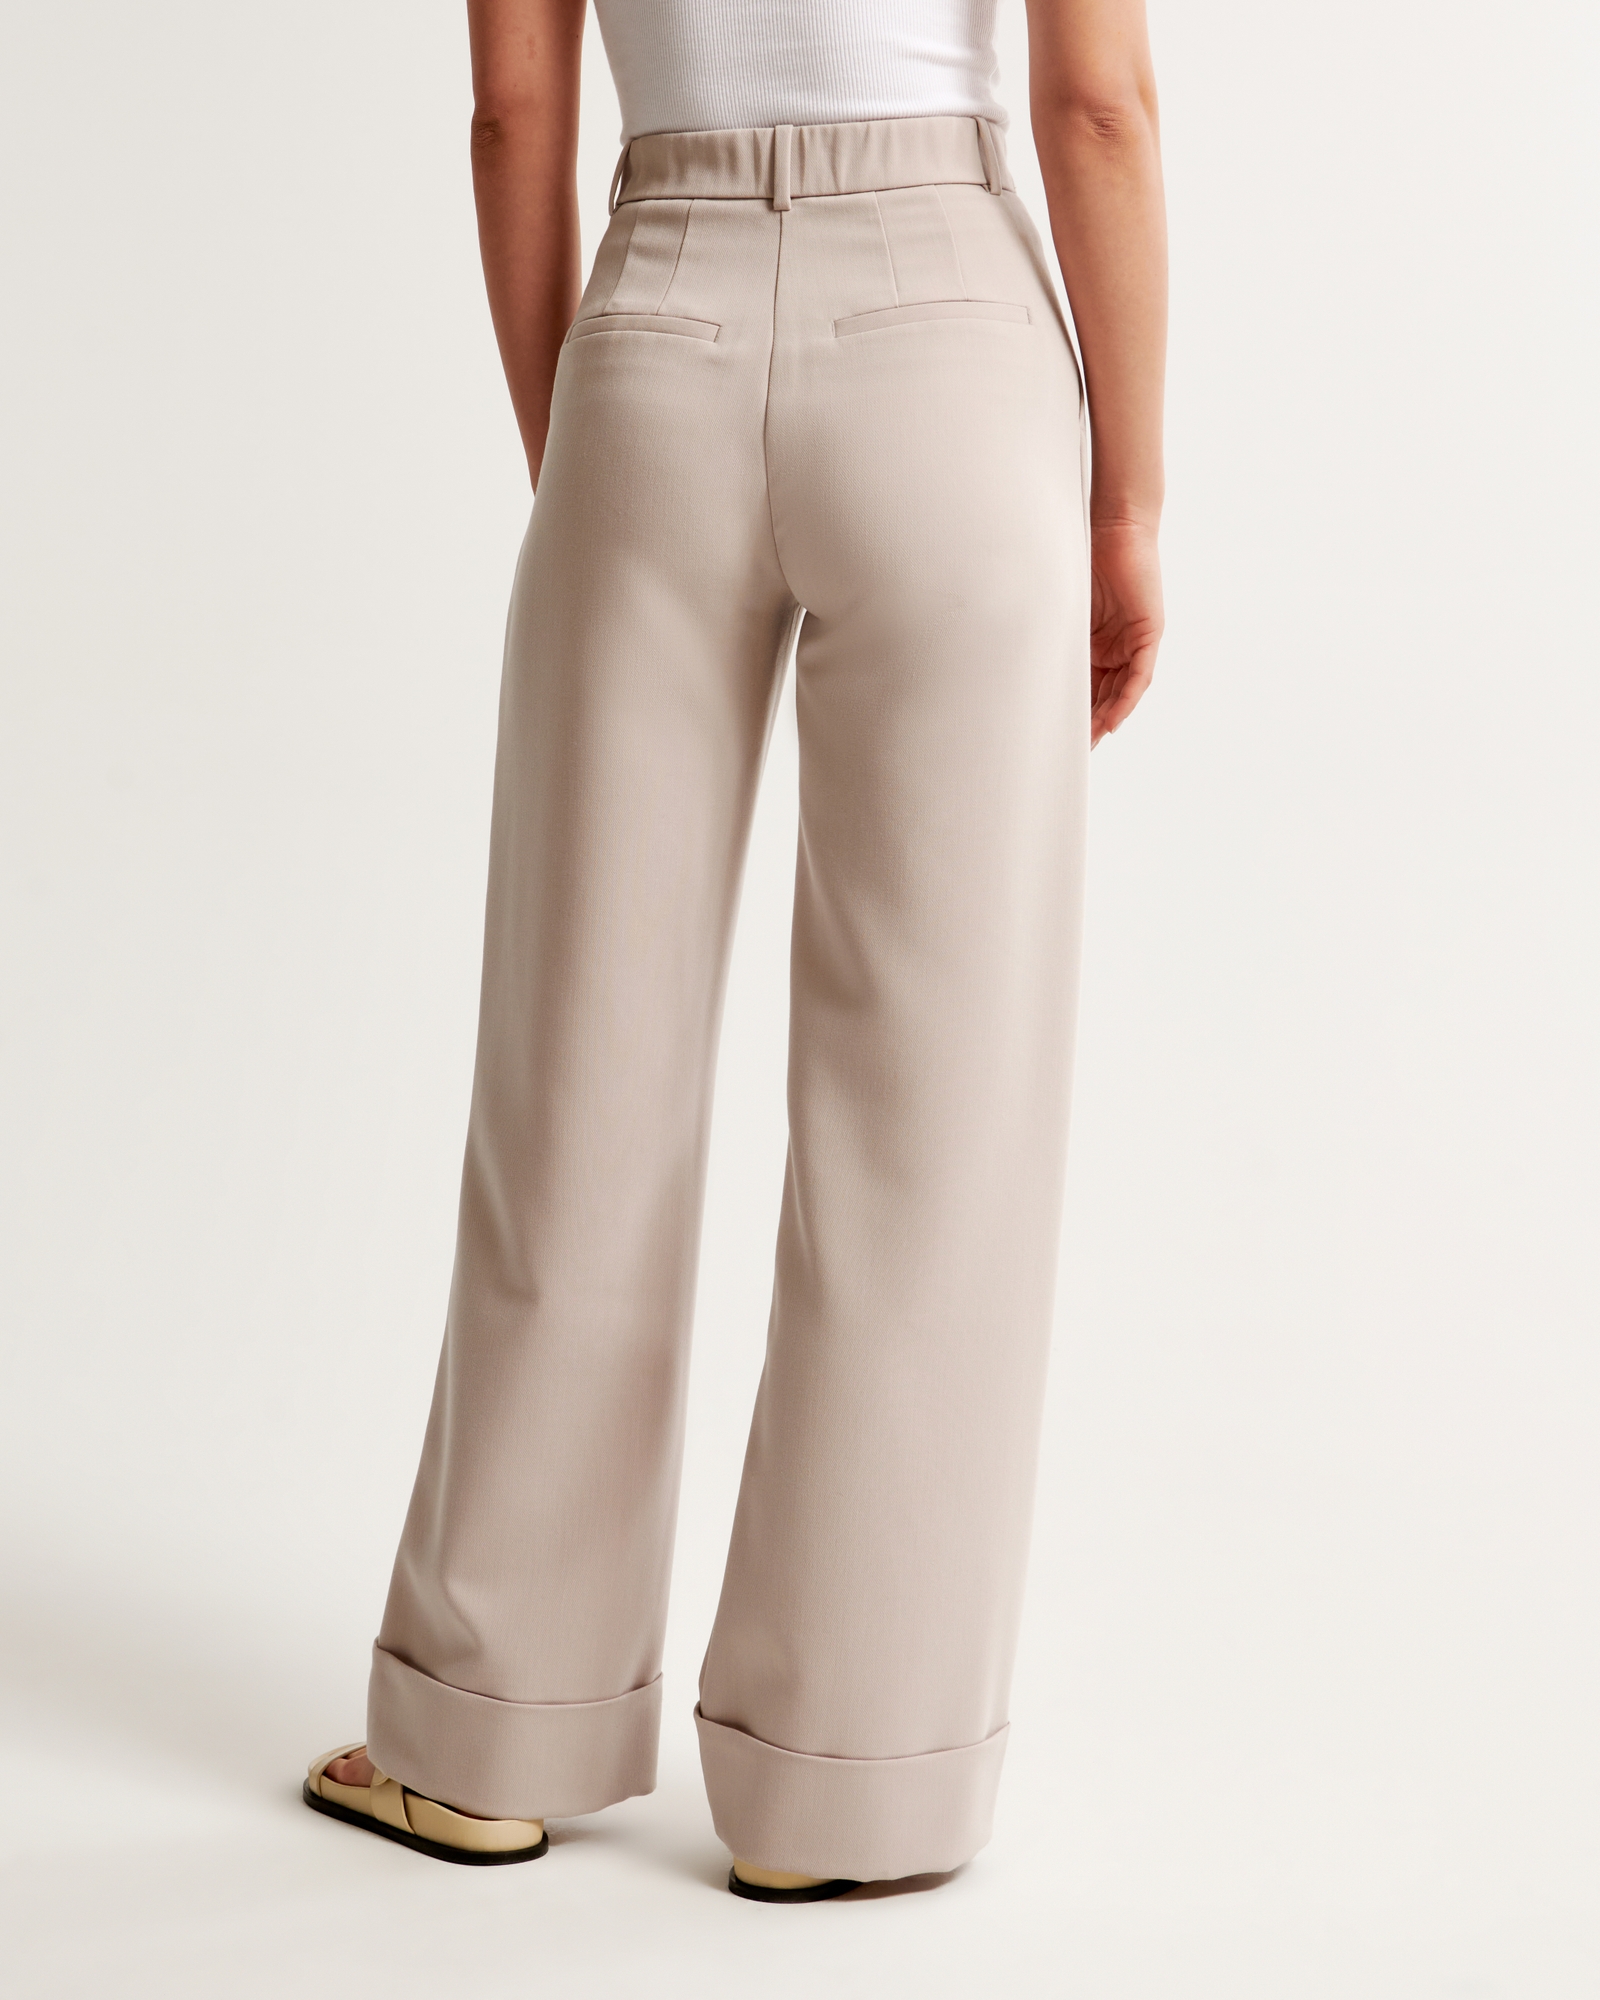 A&F Sloane Tailored Cuffed Pant